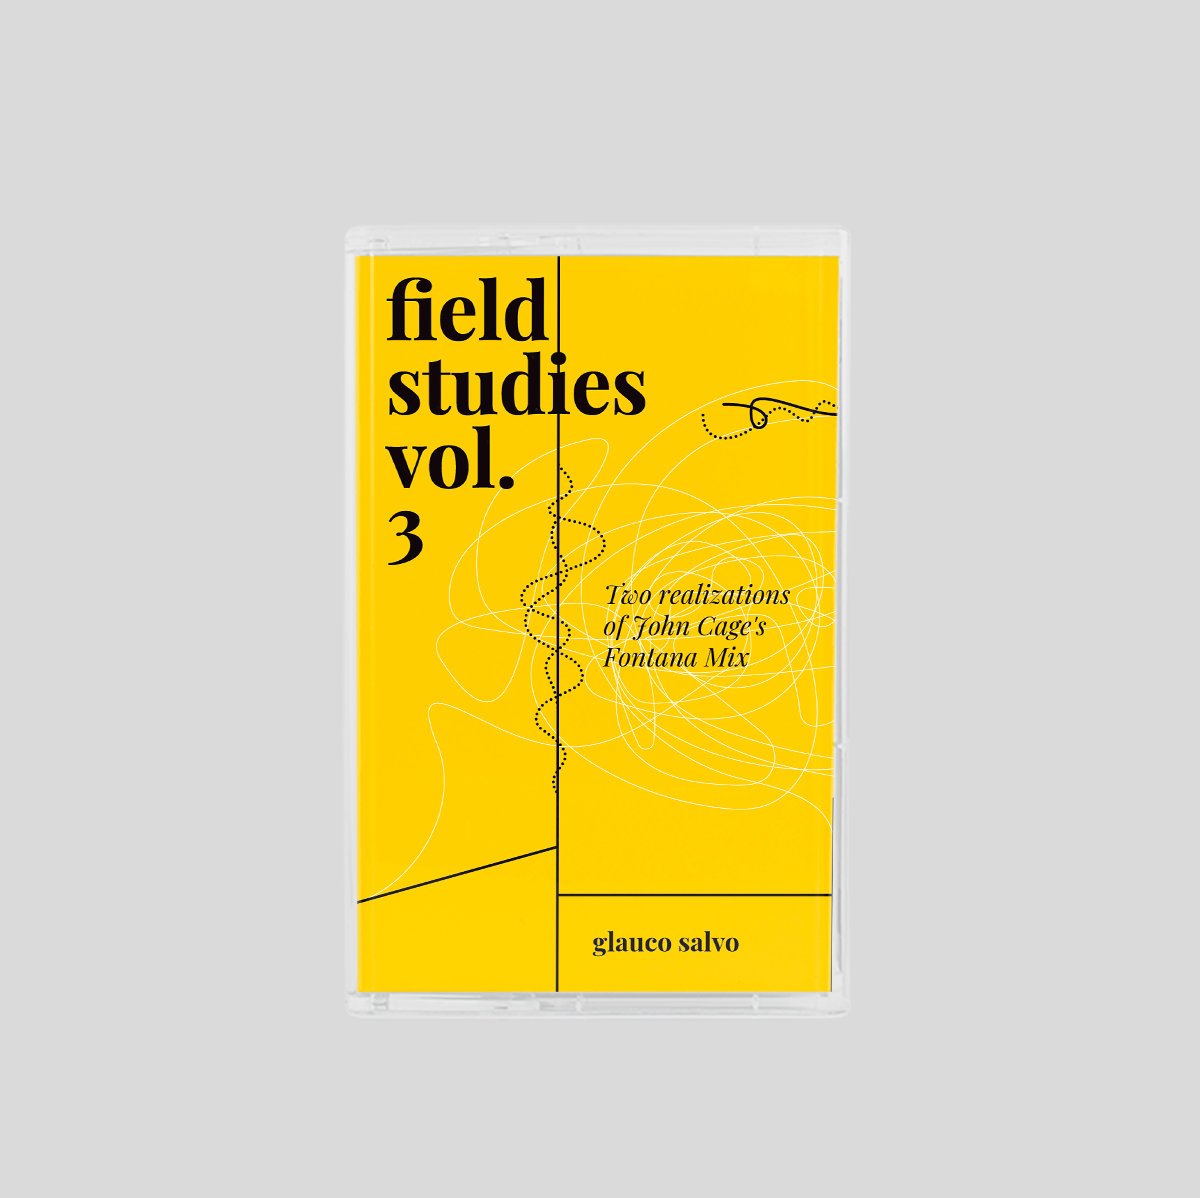 field studies vol.3 cassette's cover